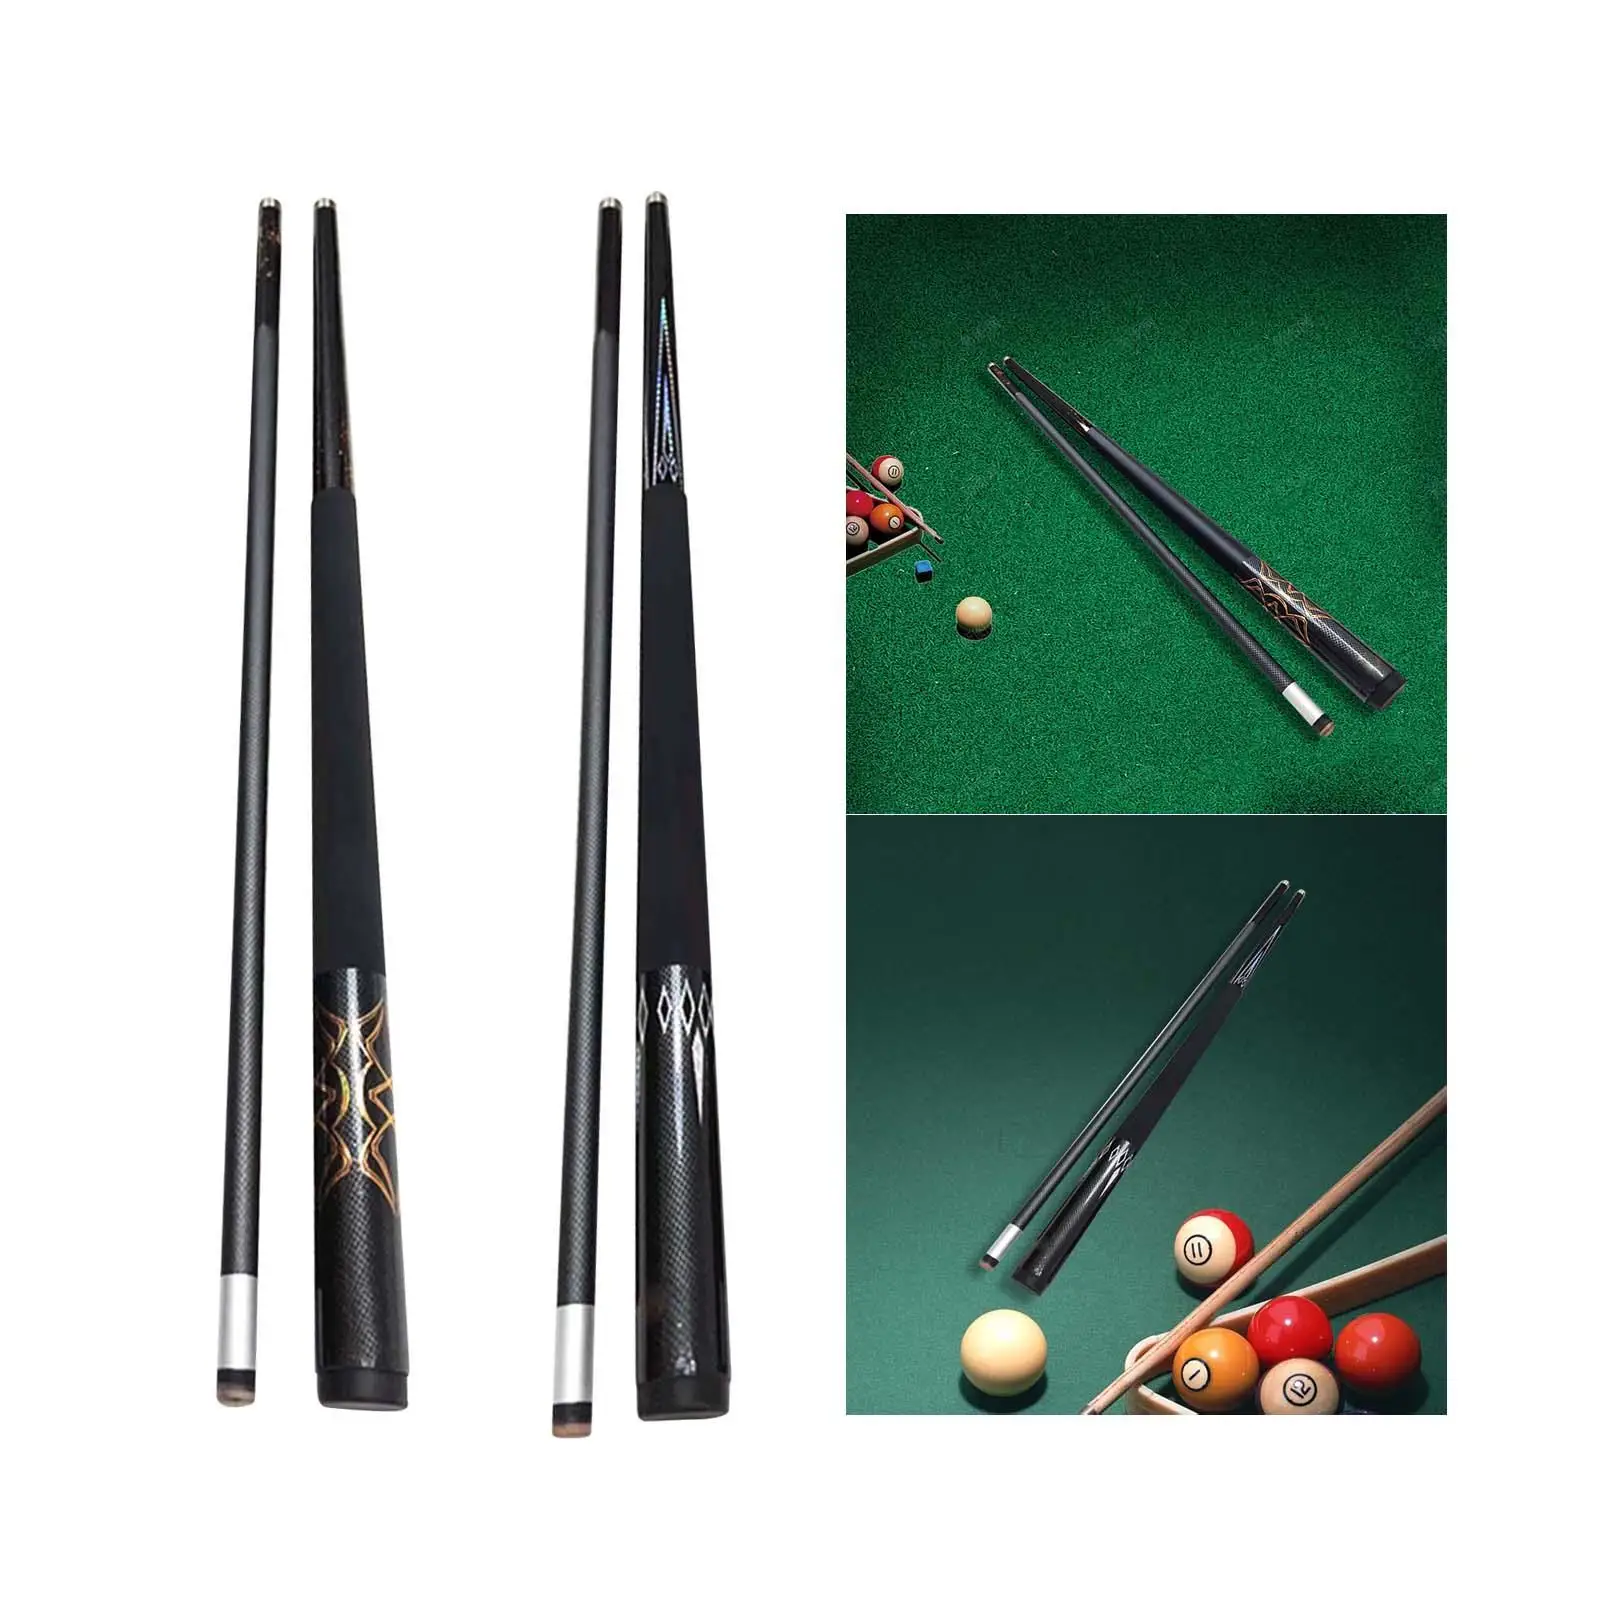 Pool Cue Split 1/2 Professional Full Size 58 inch Carbon Fiber Snooker Cue Pool Stick Billiard Cue Sticks for Adult Men Women